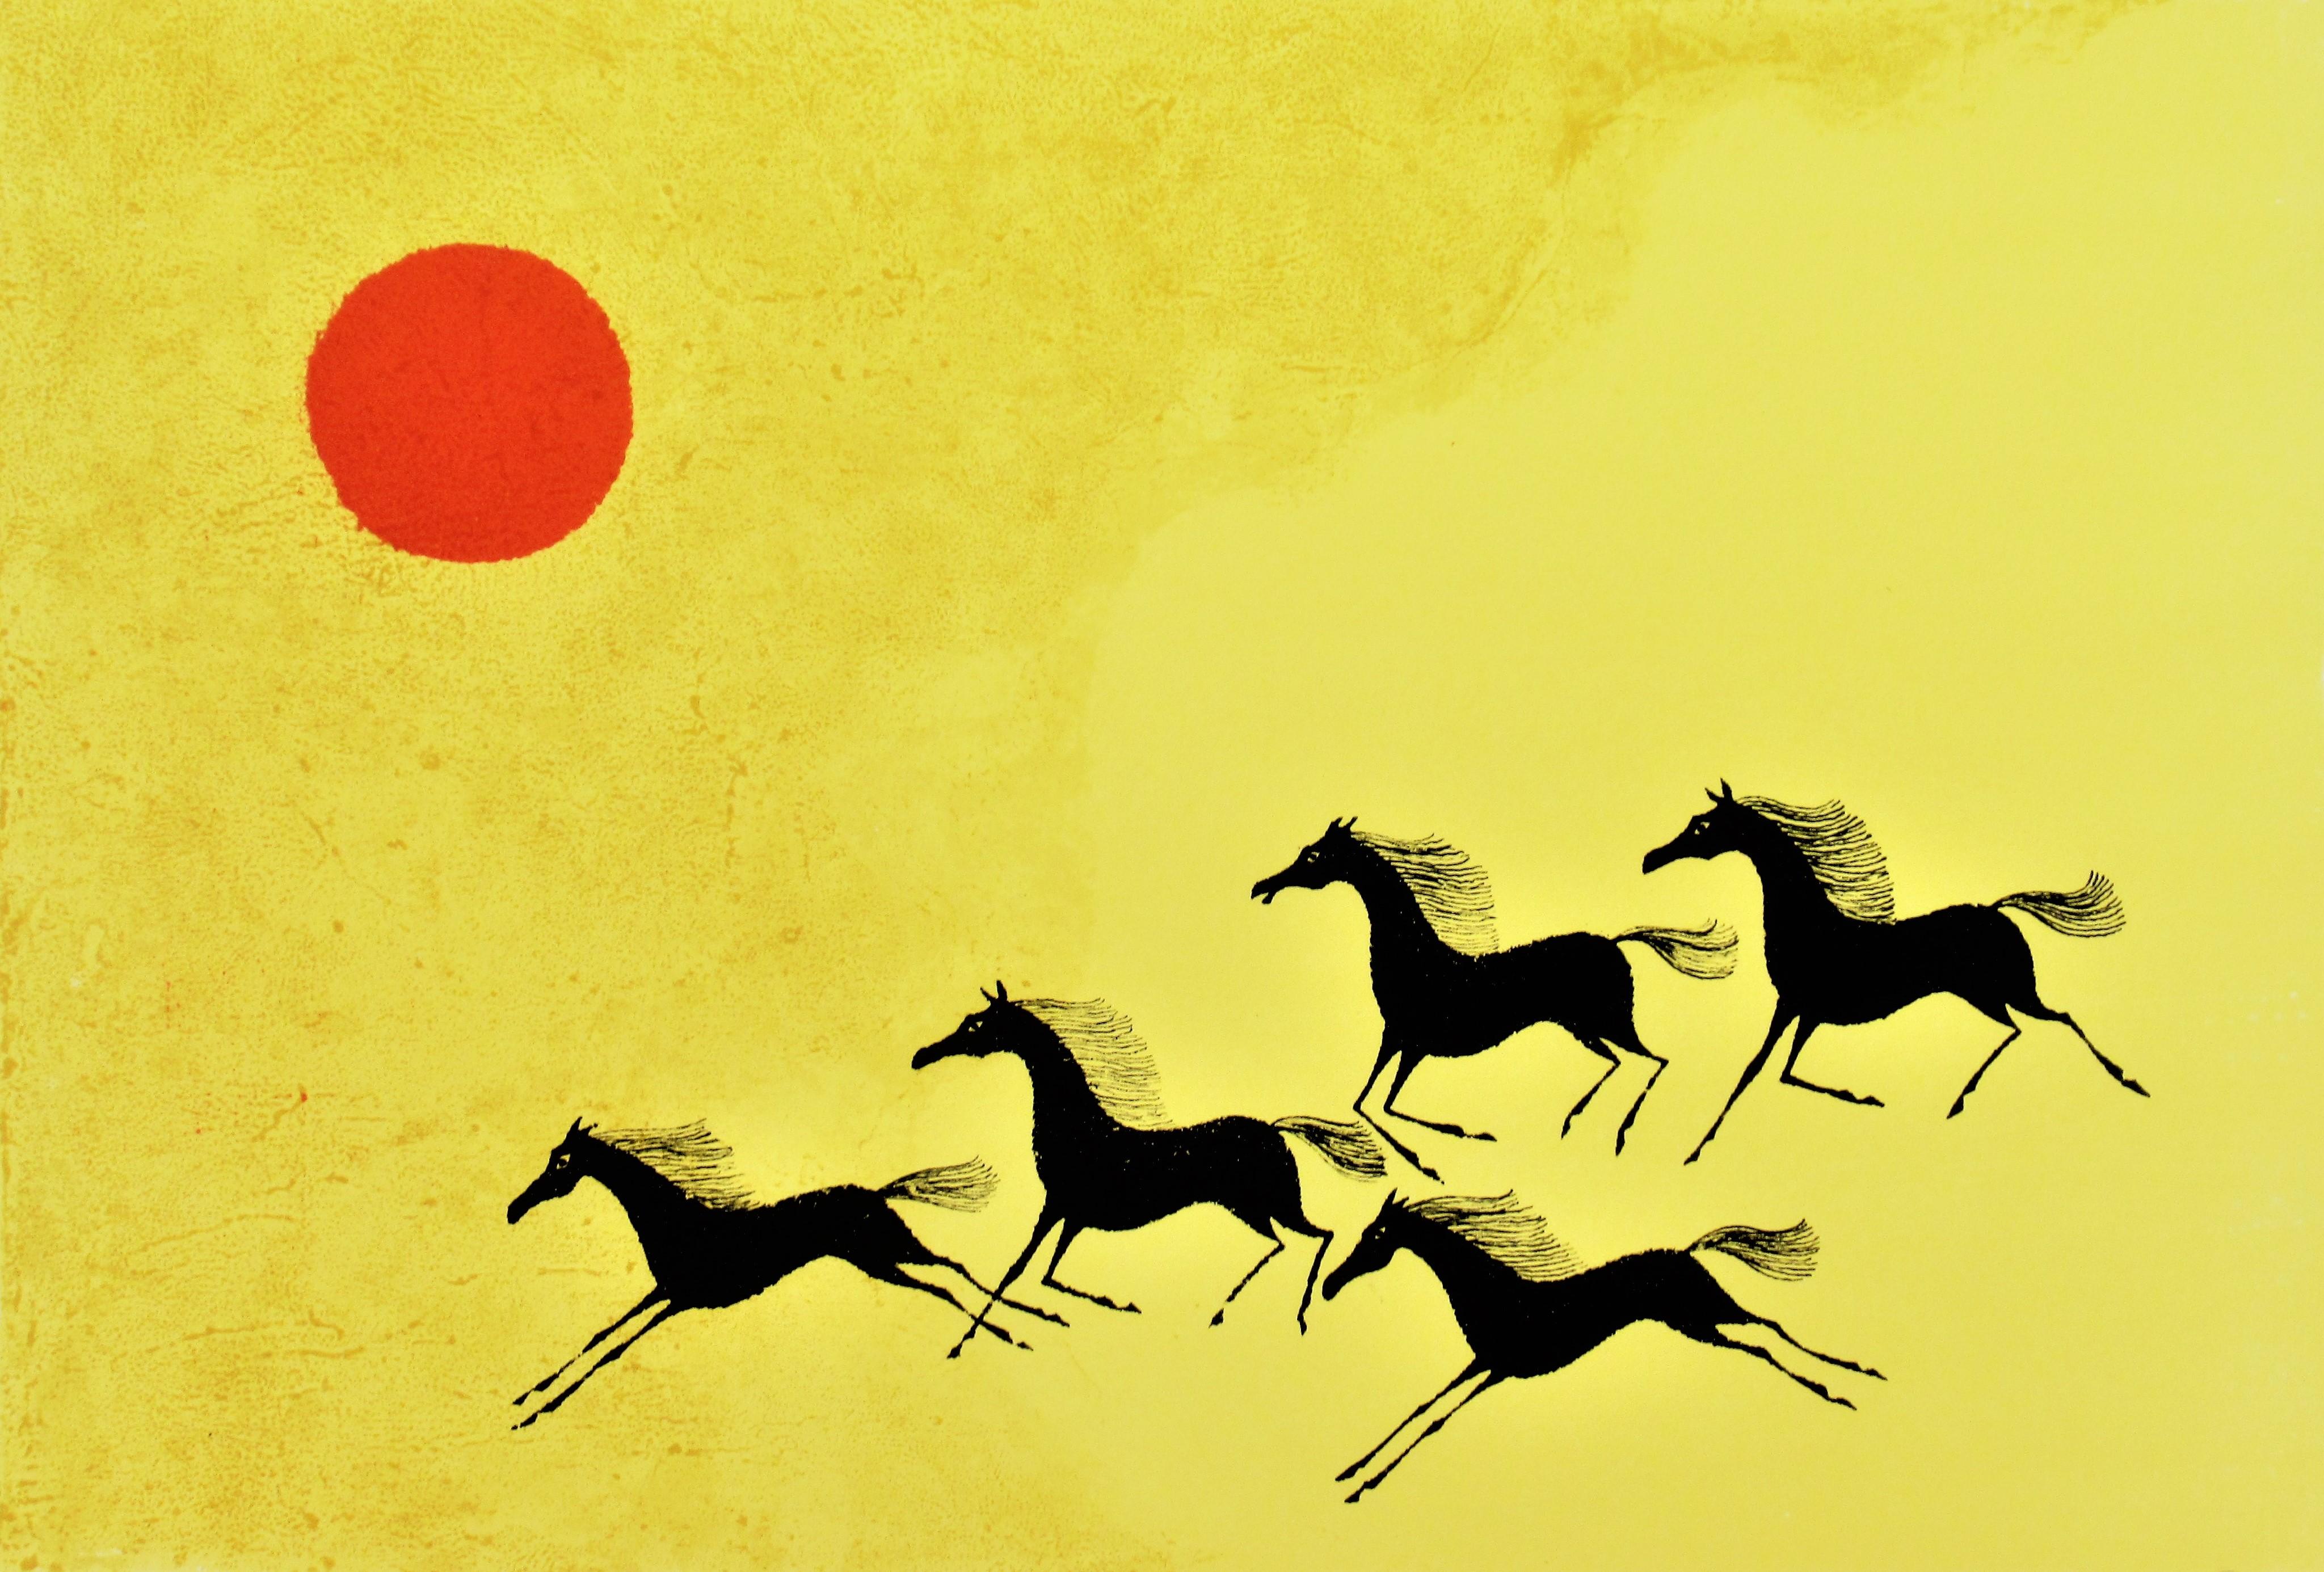 Five Horses - Print by Keith Llewellyn De Carlo